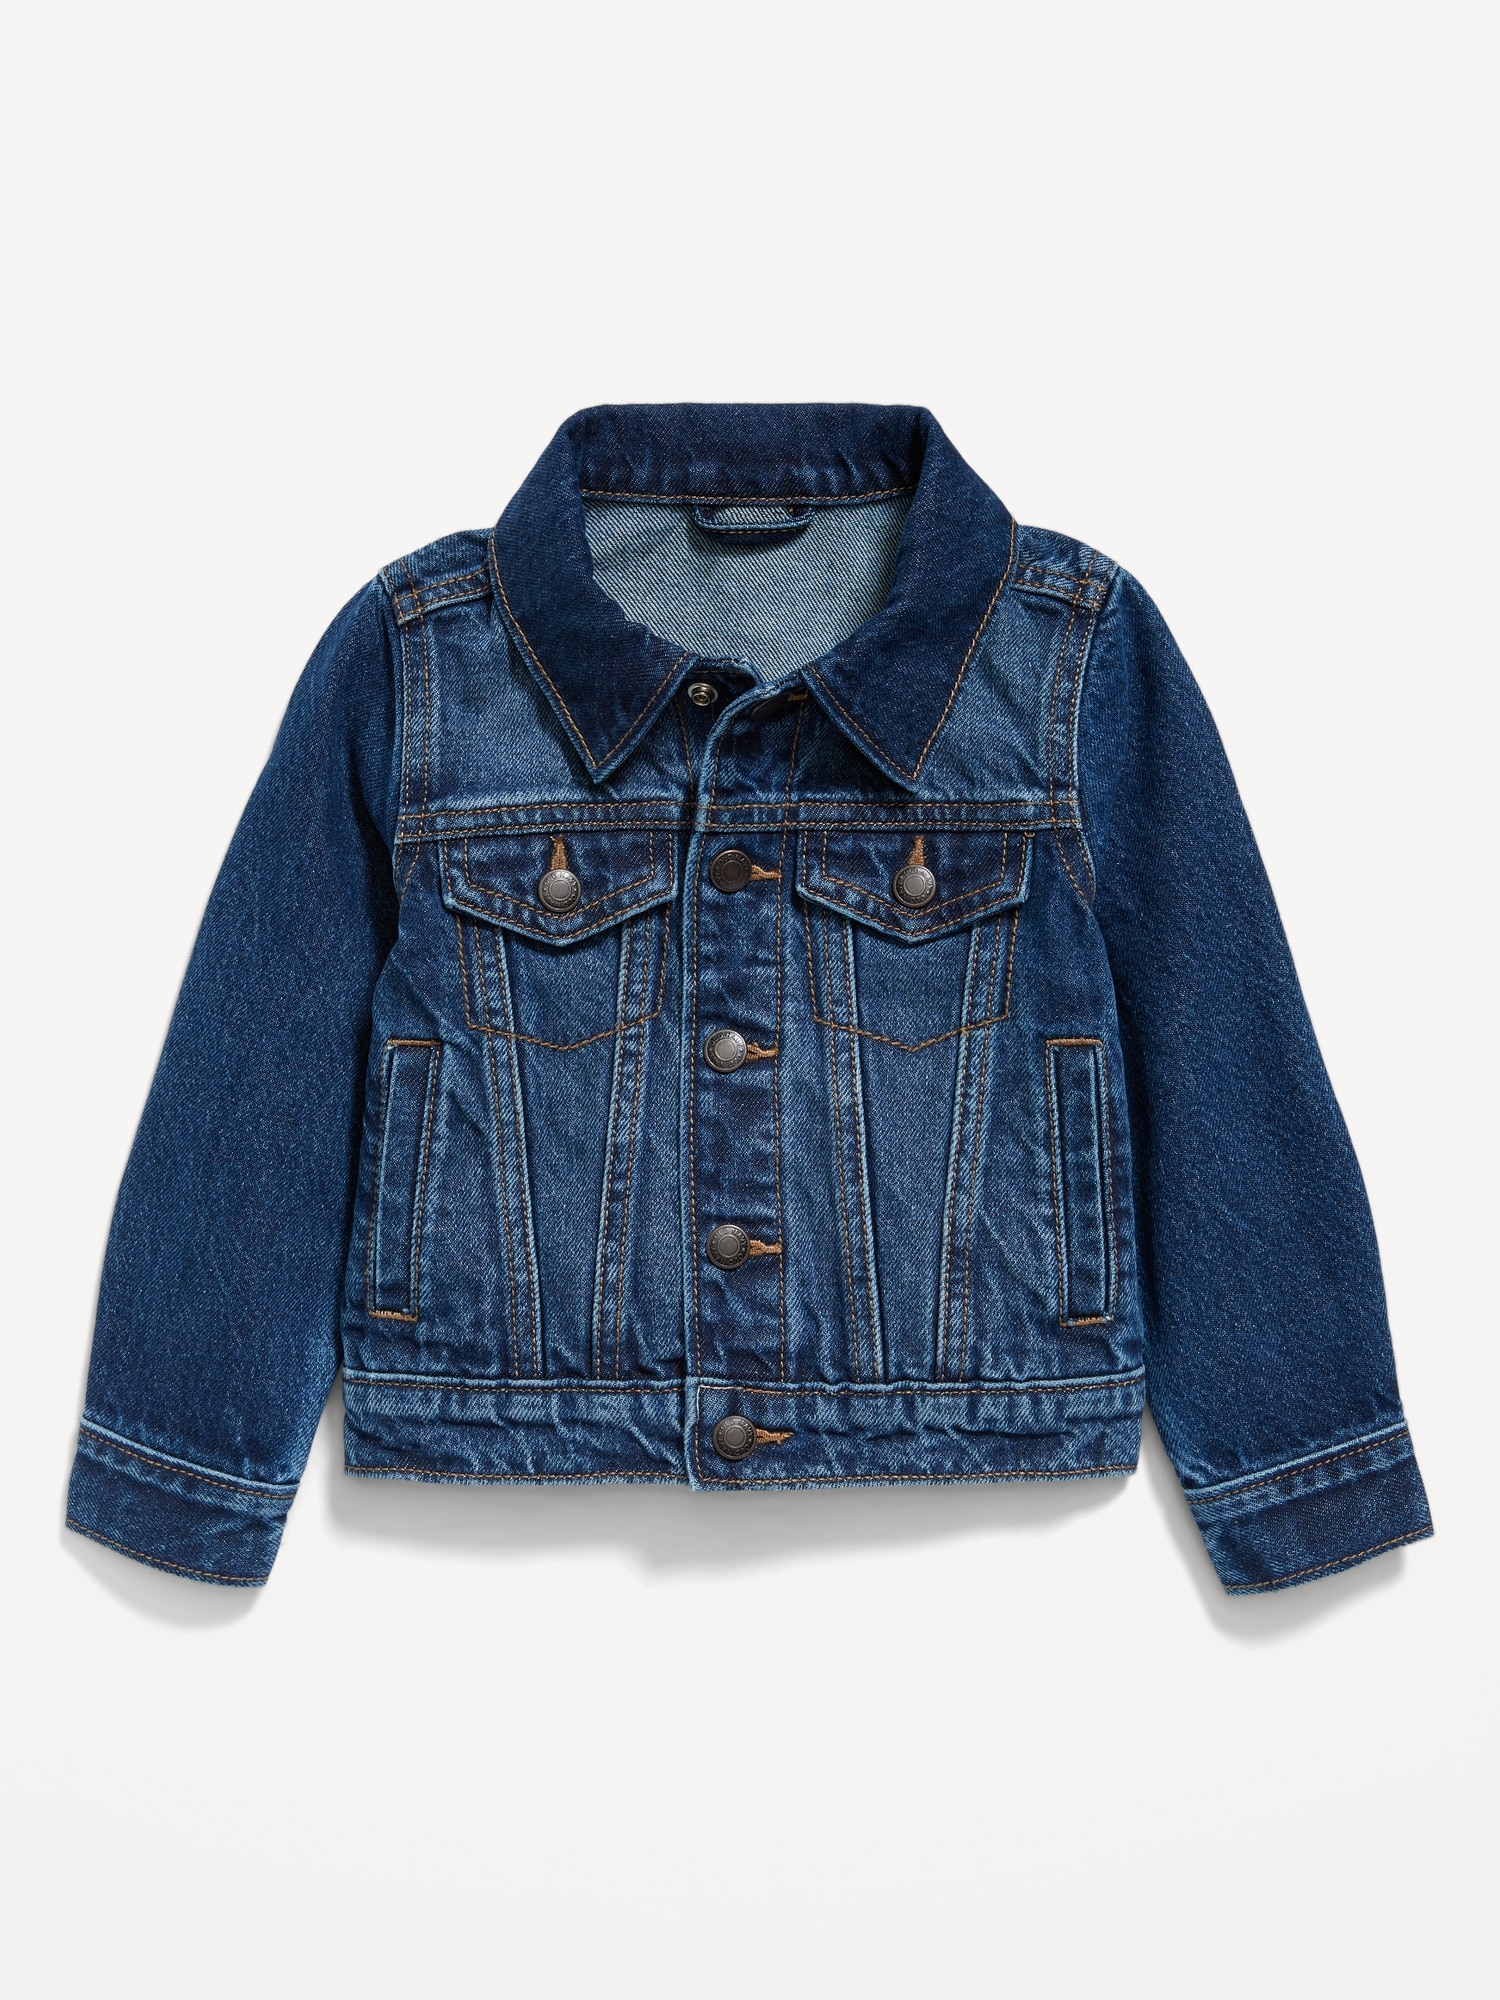 Justice Denim Blue Jean Jacket Girls Size 8 Button Front | eBay-anthinhphatland.vn